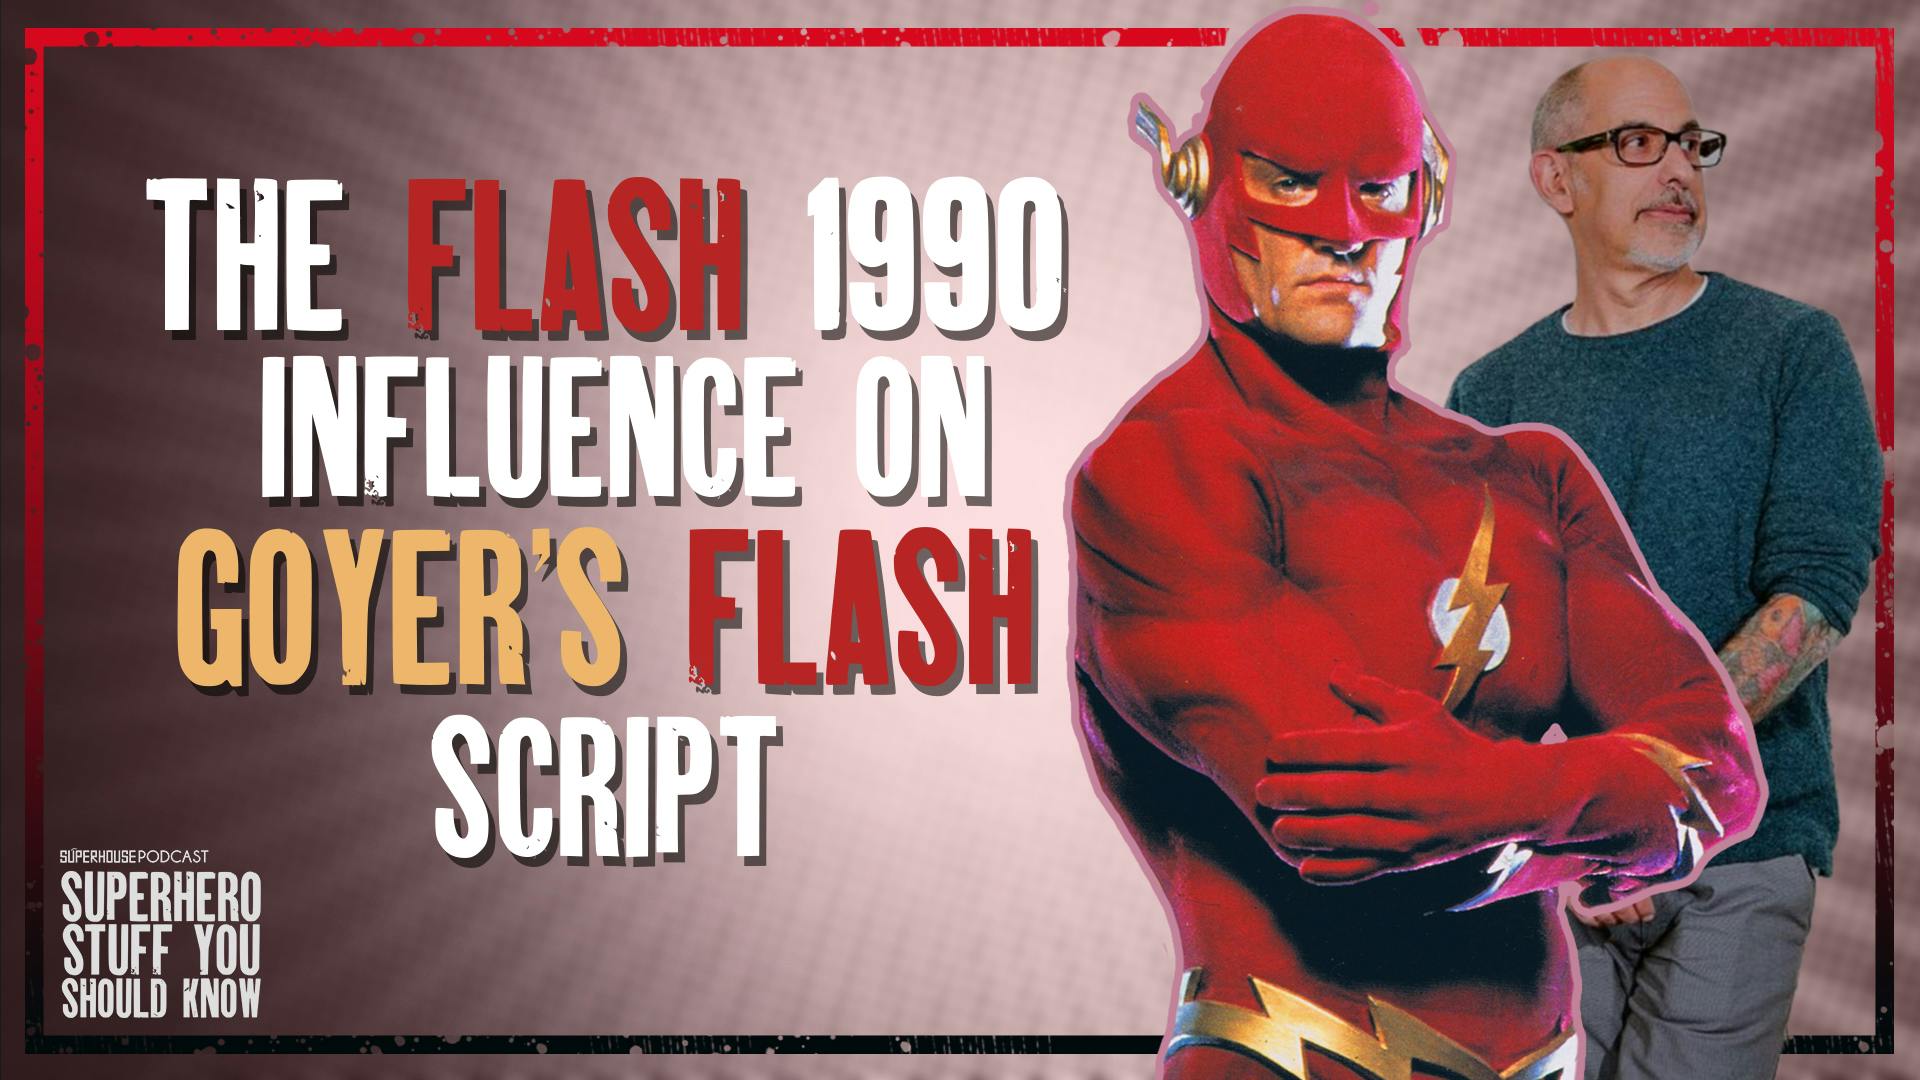 The Flash 1990 Influence on David Goyer's Flash Script